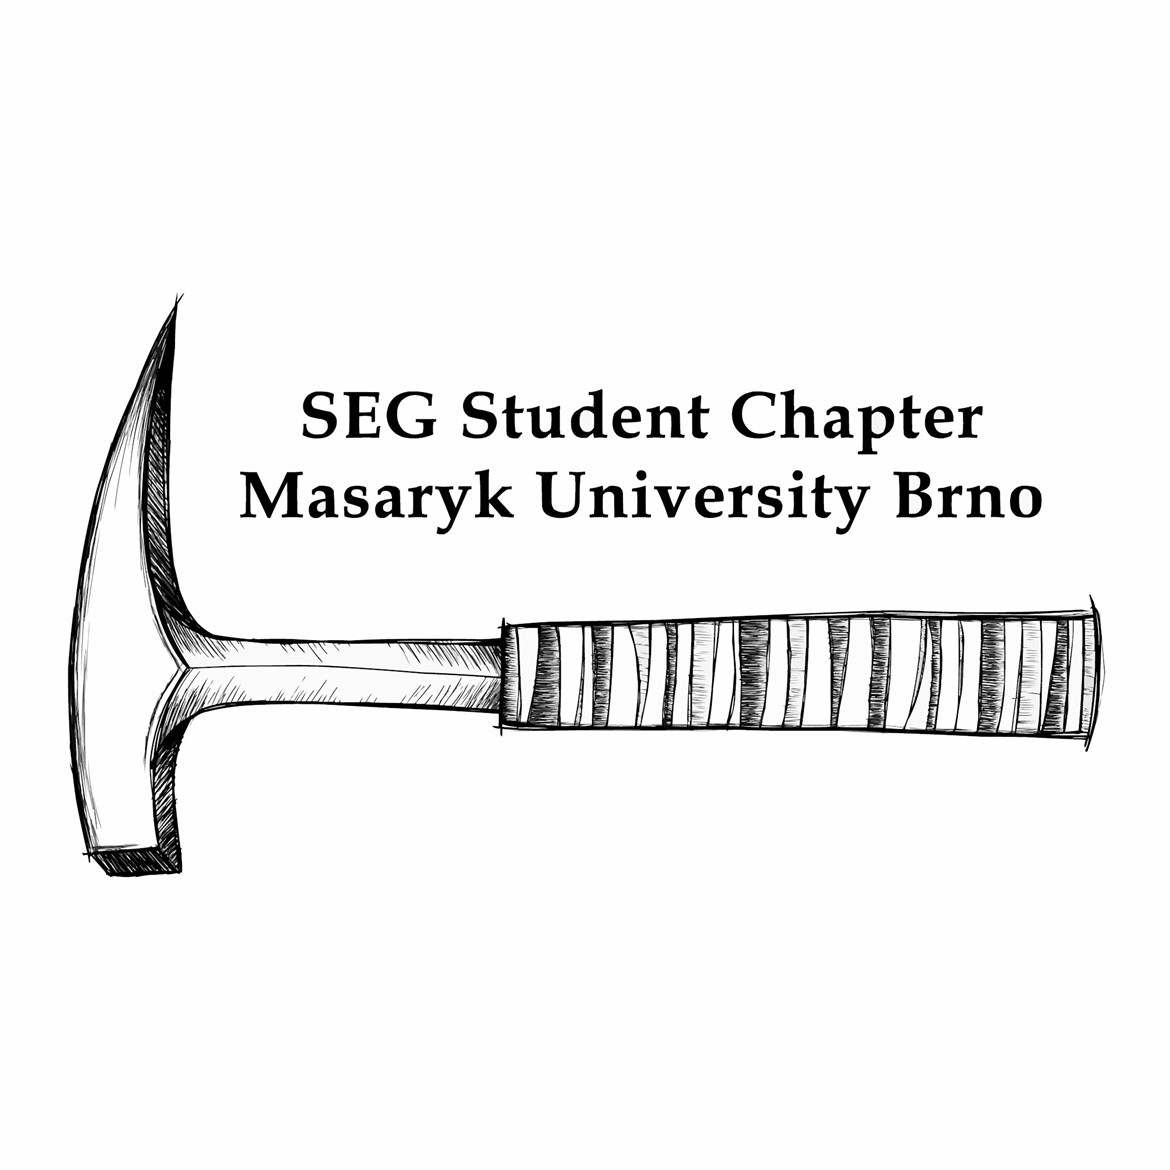 SEG Student Chapter Masaryk University Brno